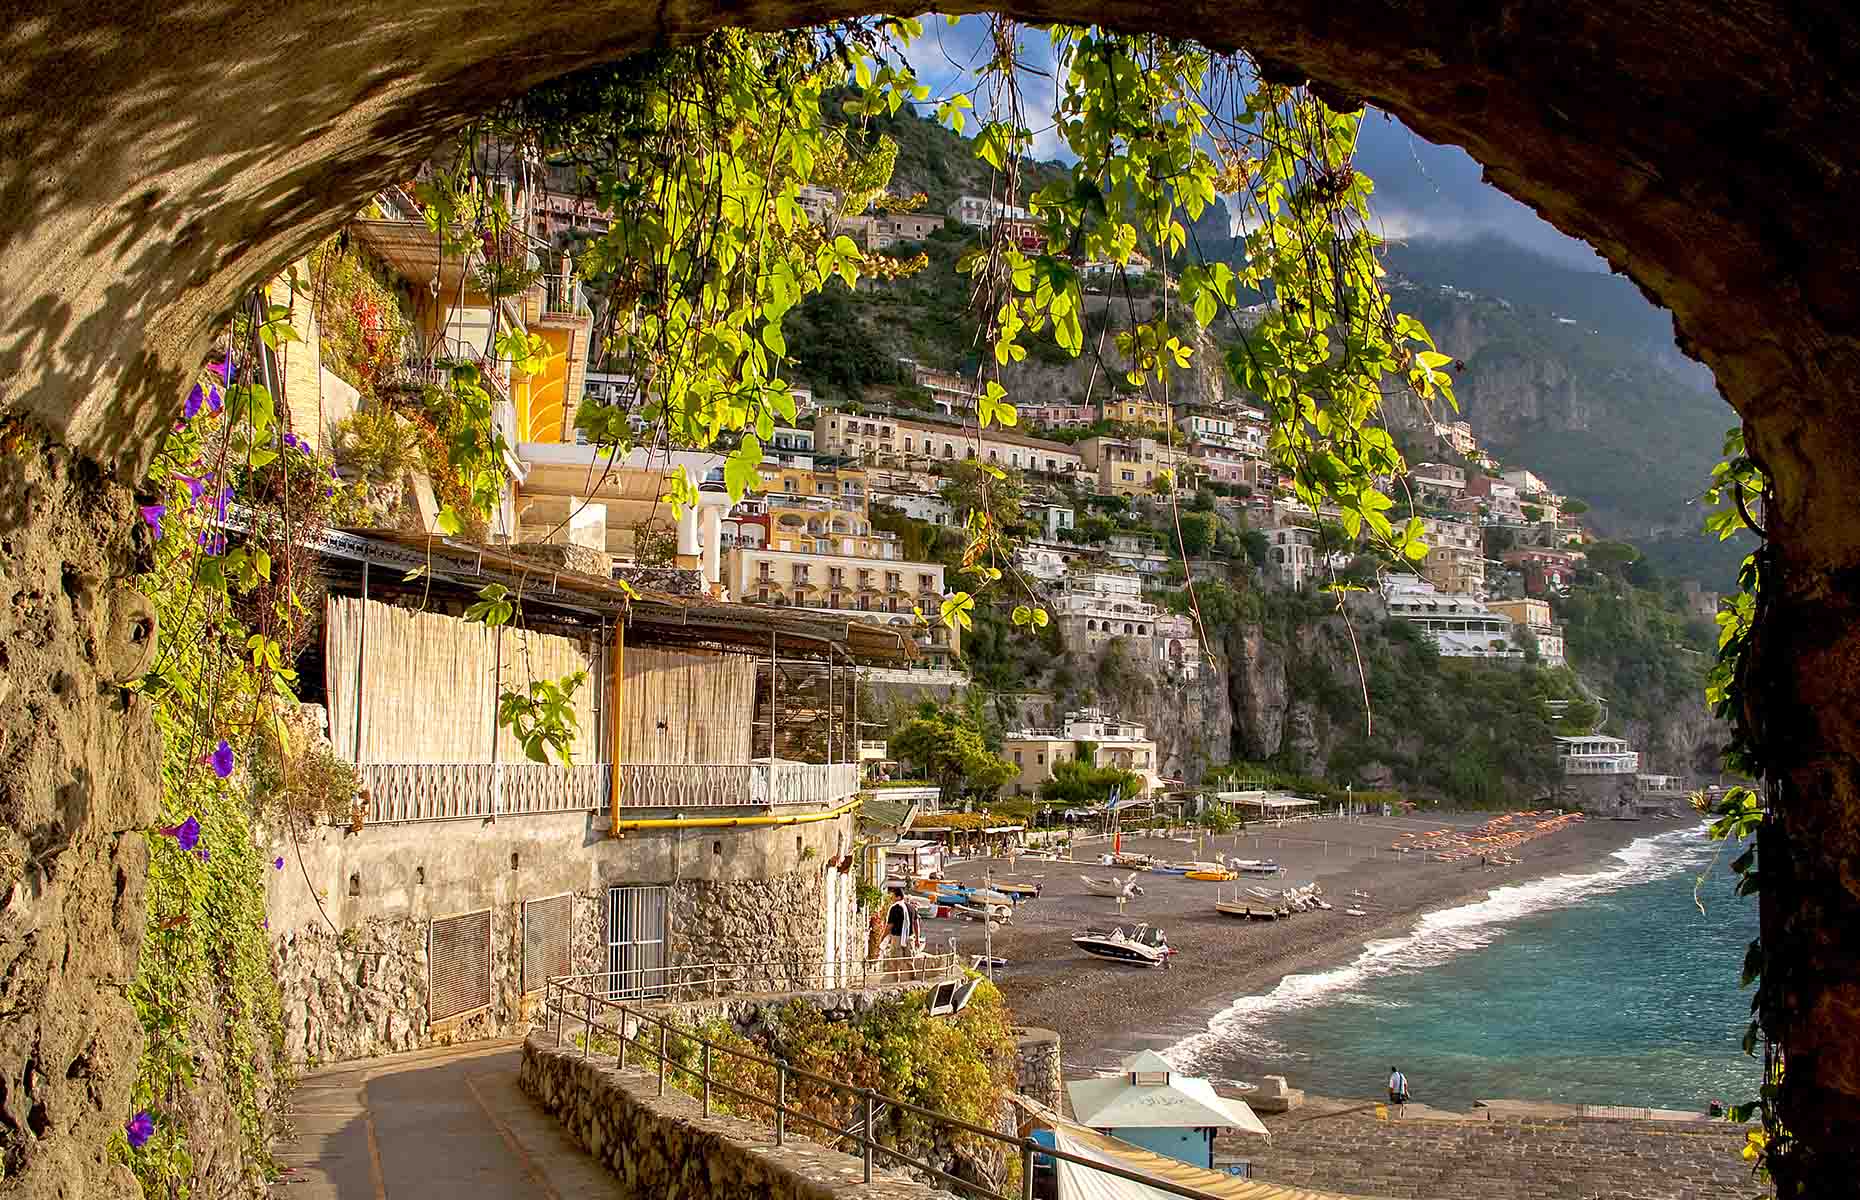 A town on the Amalfi Coast (Image: Dmussman/Shutterstock)